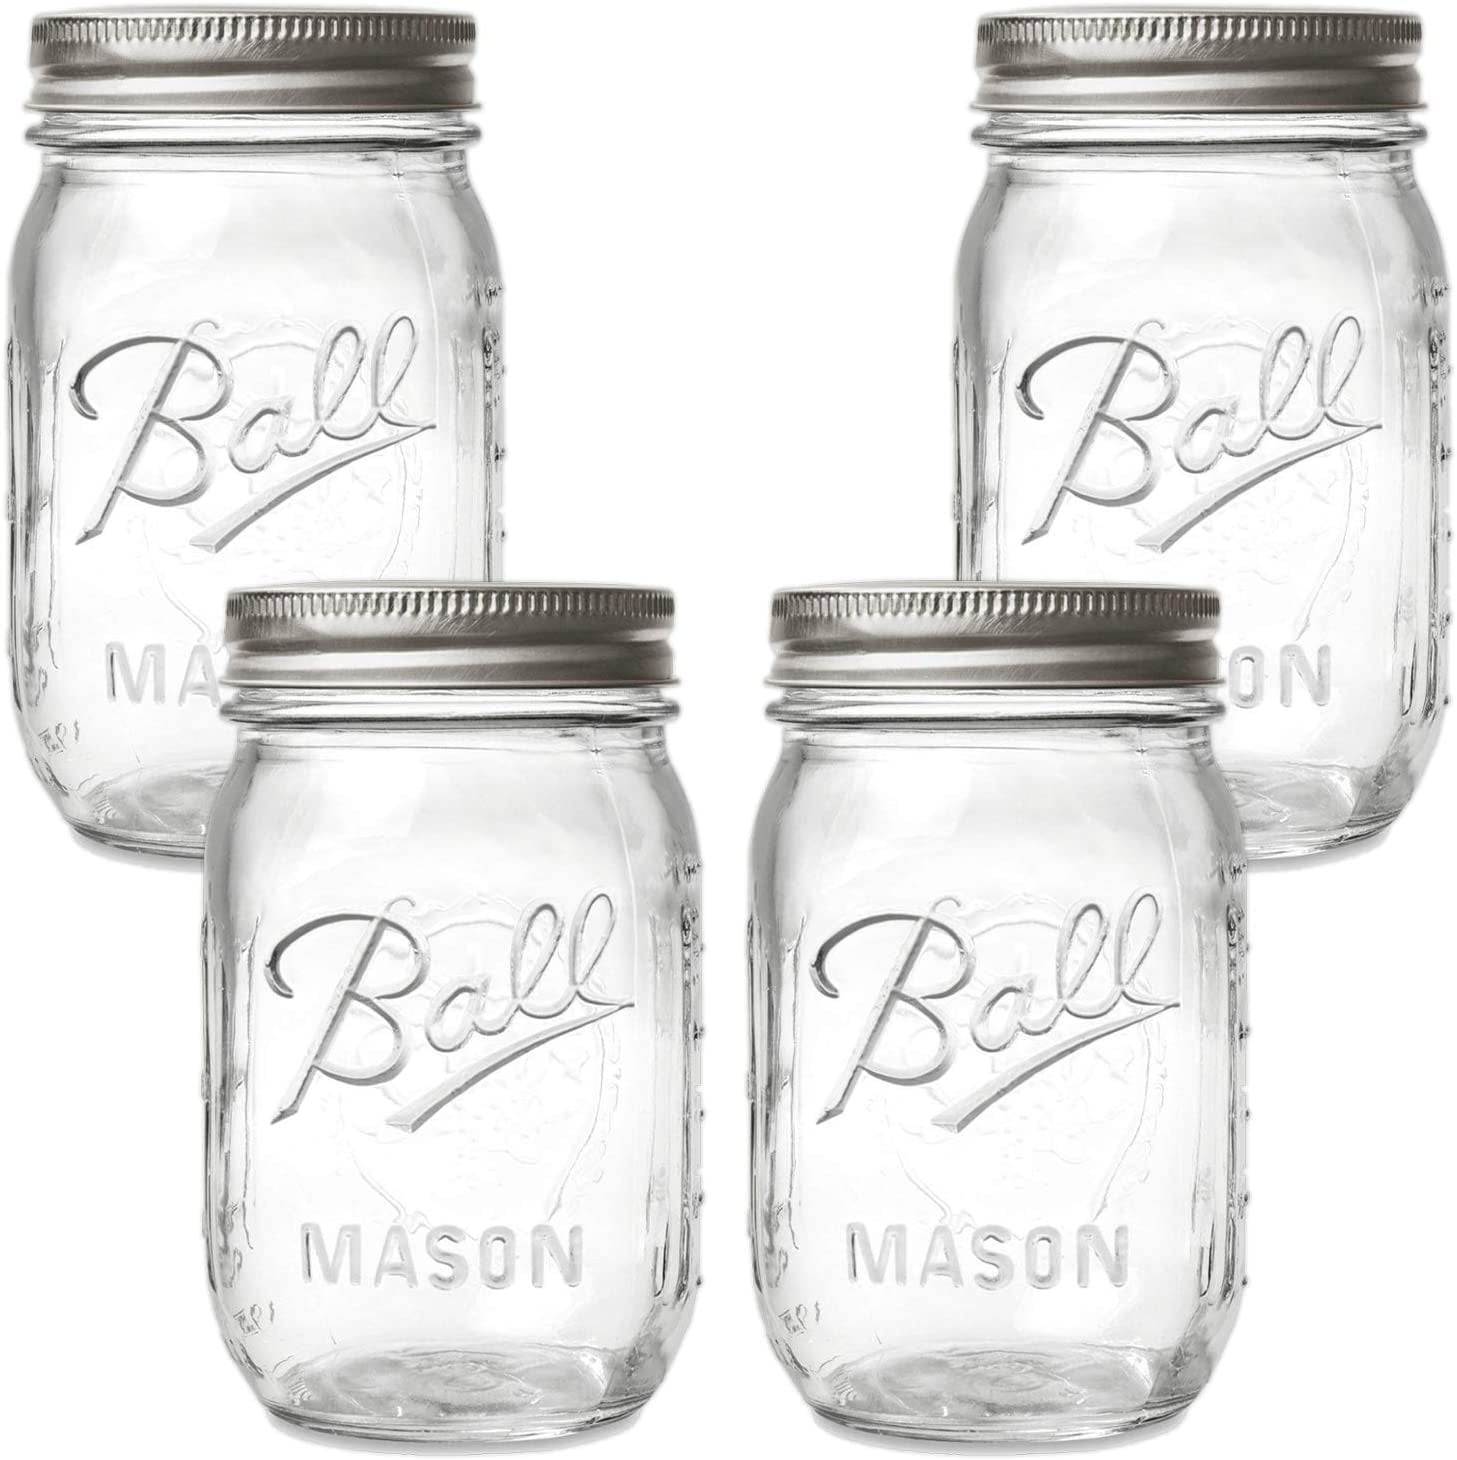 Lid & Band Clear Glass Single Ball16oz Regular Mouth Pint Canning Mason Jar 